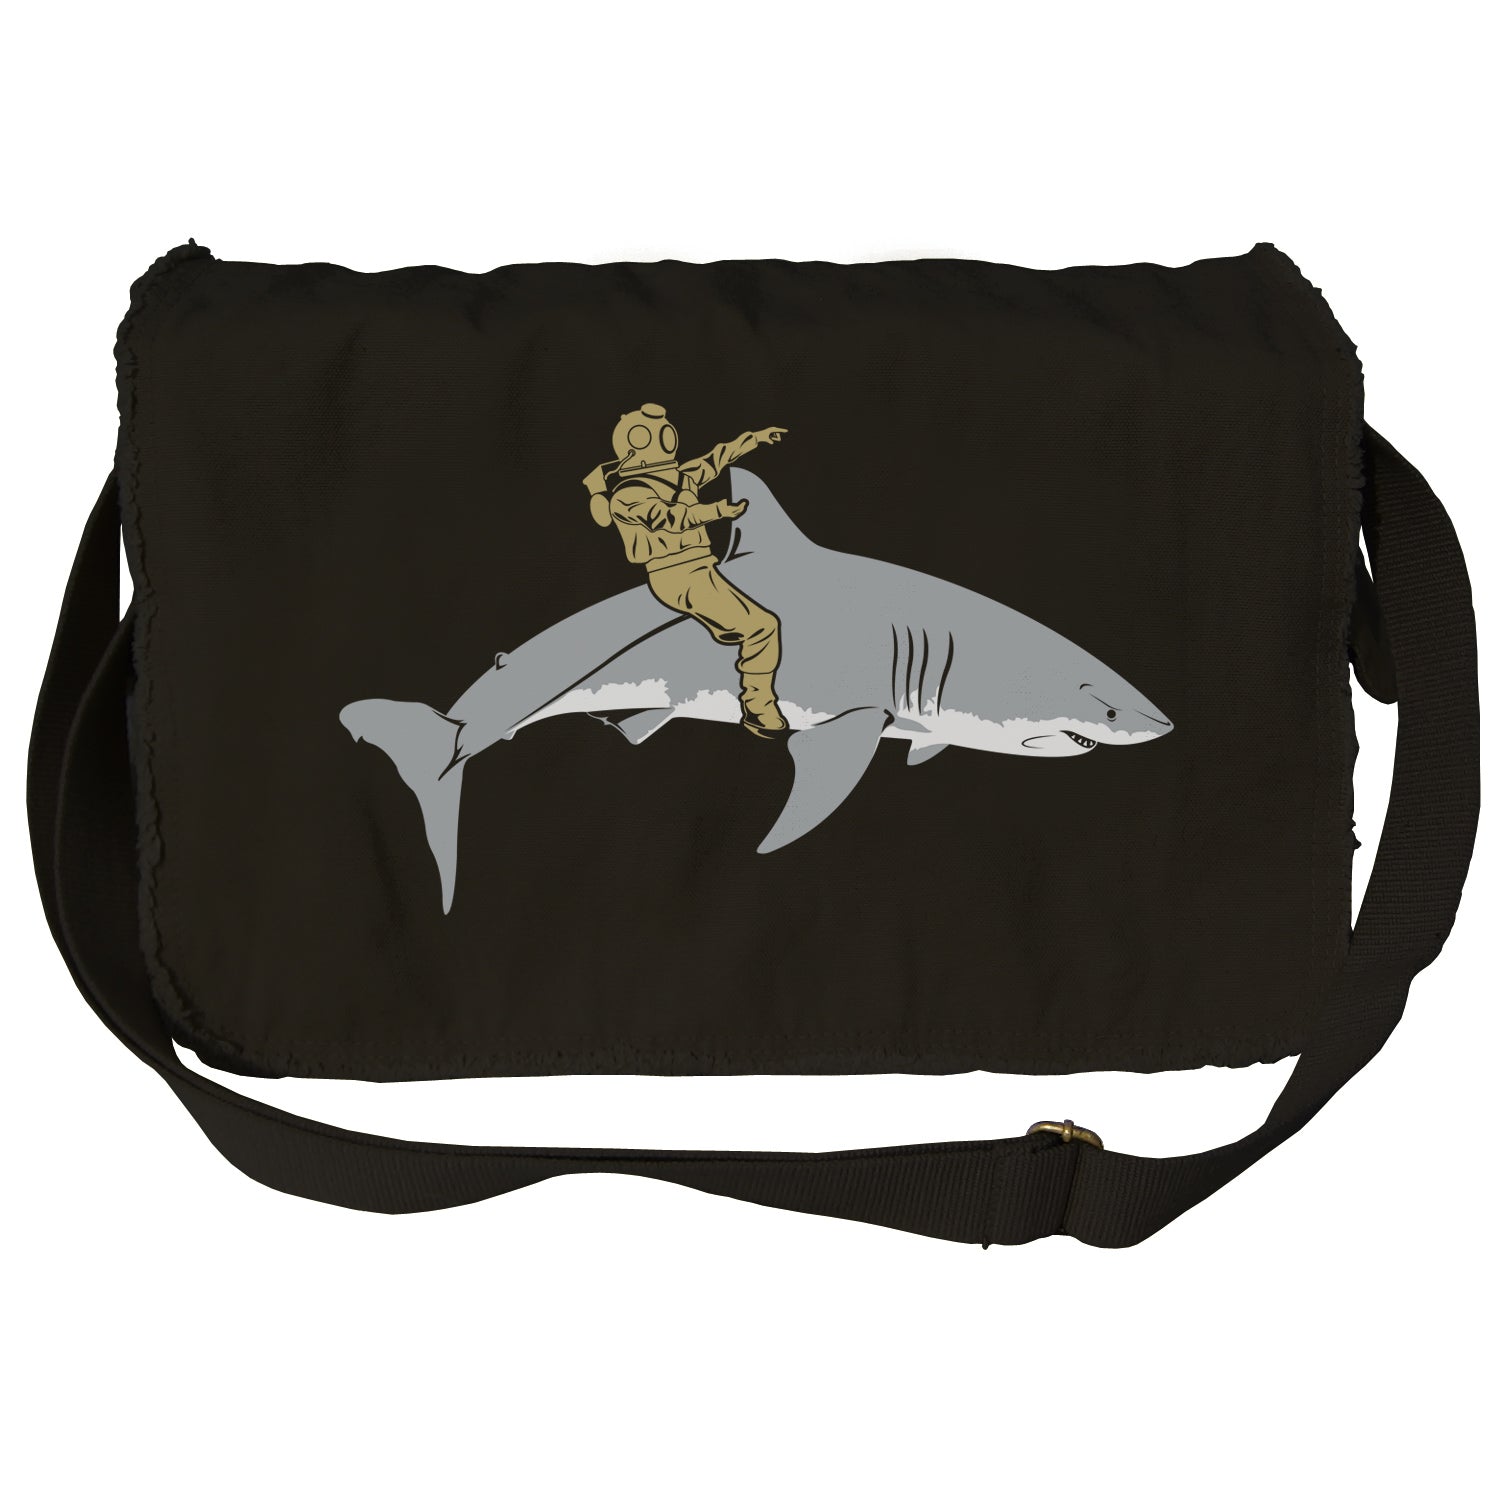 Diver Riding a Shark Messenger Bag - By Ex-Boyfriend